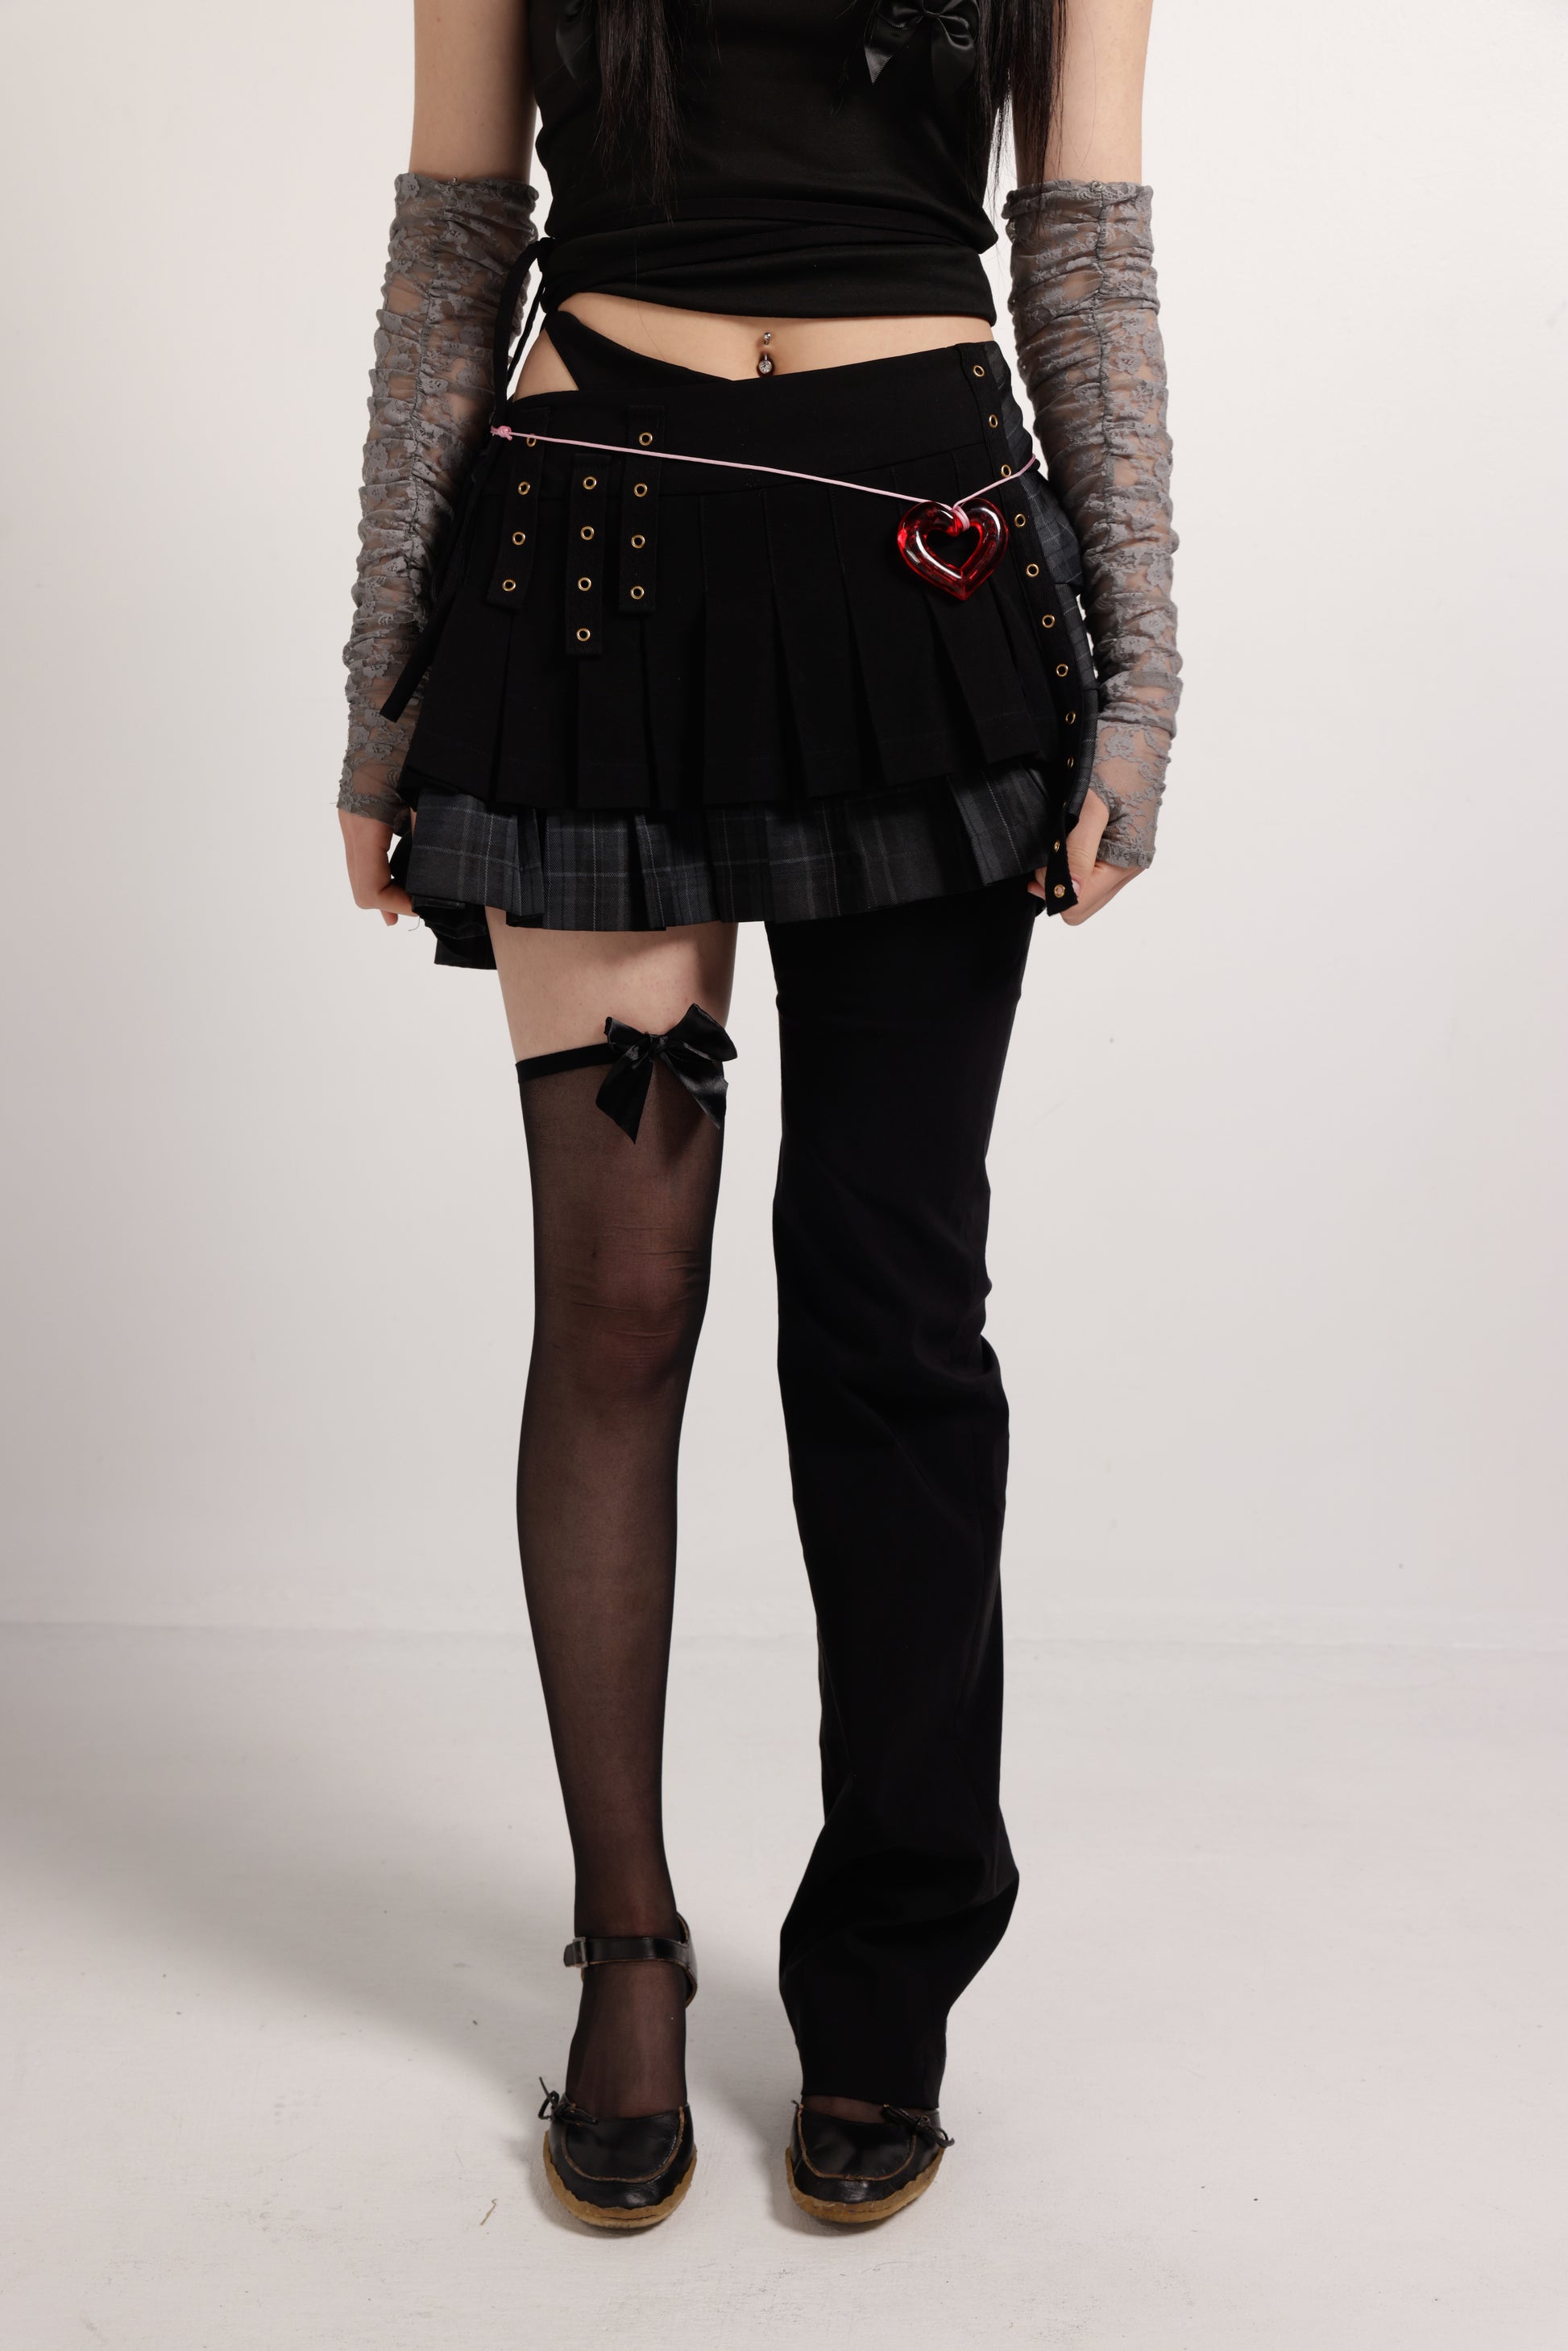 girl wearing one knee high sheer sock with black bow | Bow Me Sock in Black | Baobei Label